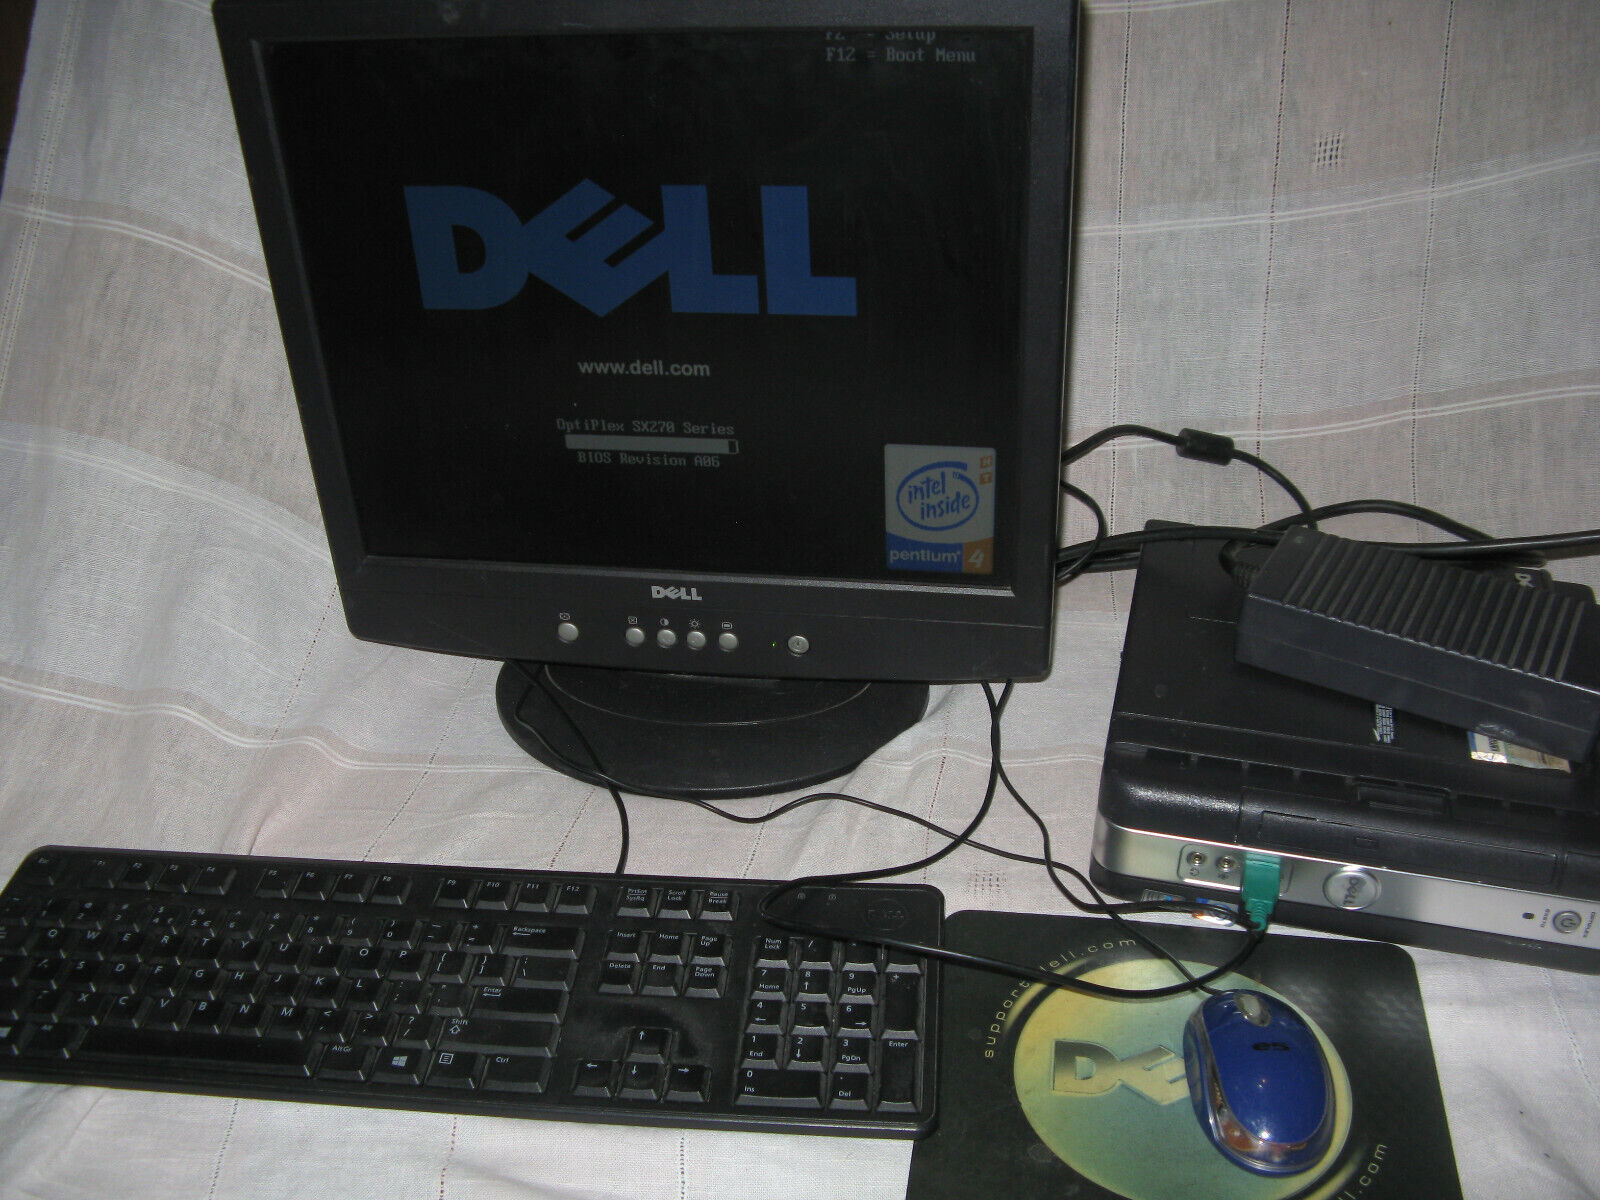 Dell Optiplex SX270 P4 3 GHz, 1 GB ram, LCD 17, HDD 40GB, XP License, Knoppix